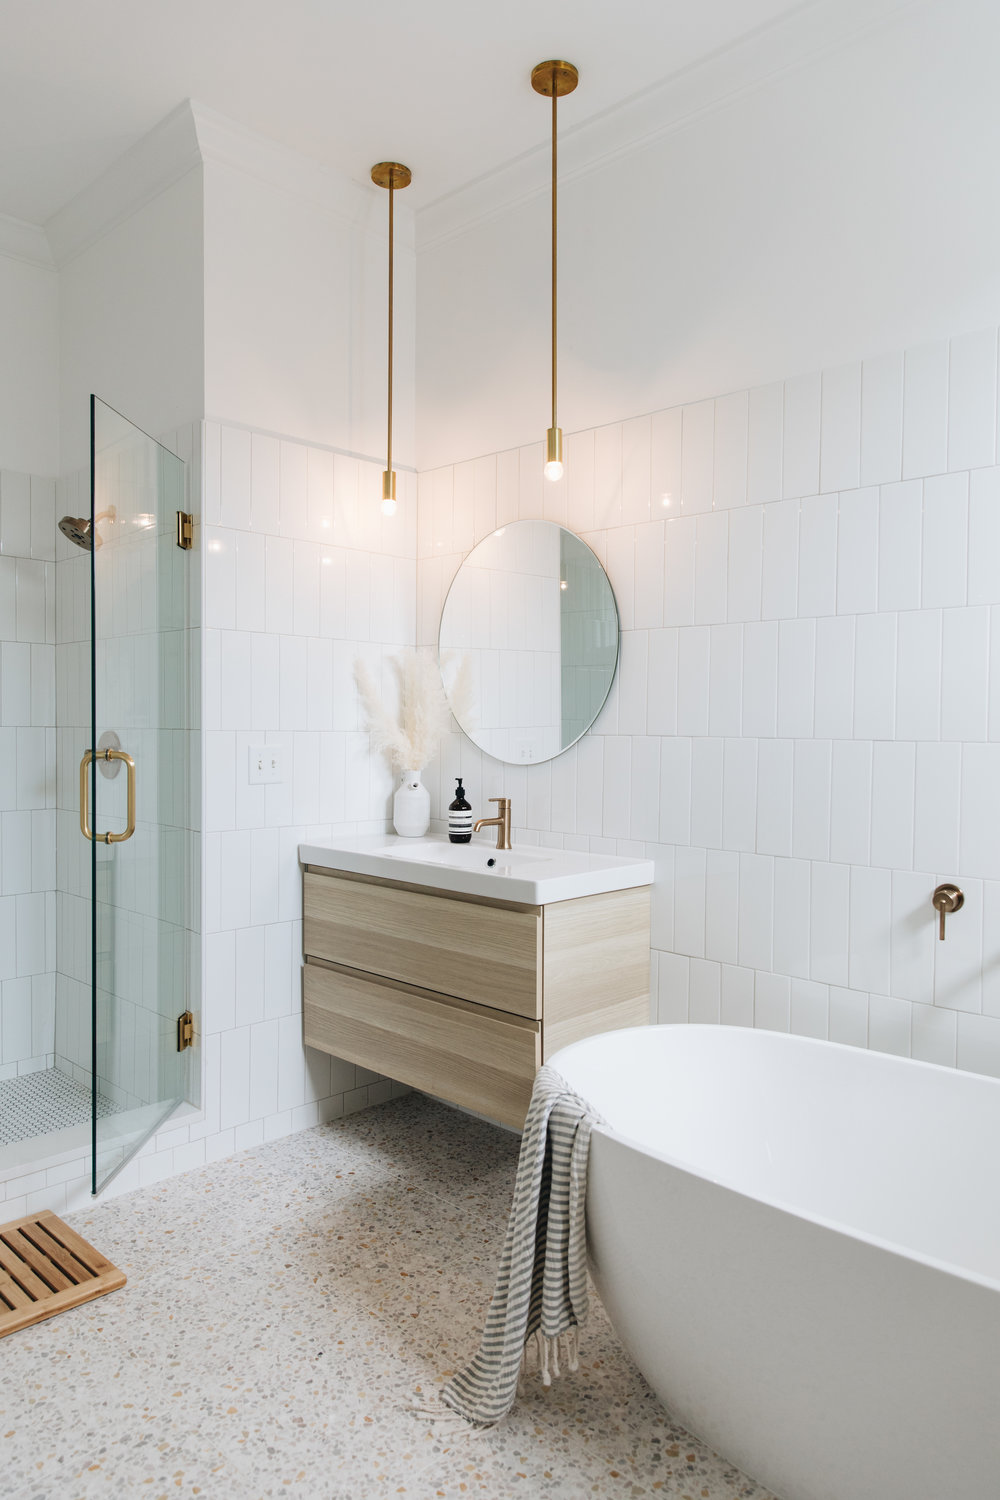   Vanity    Faucets    Mirrors    Pendants    Soaking Tub    Shower Trim  